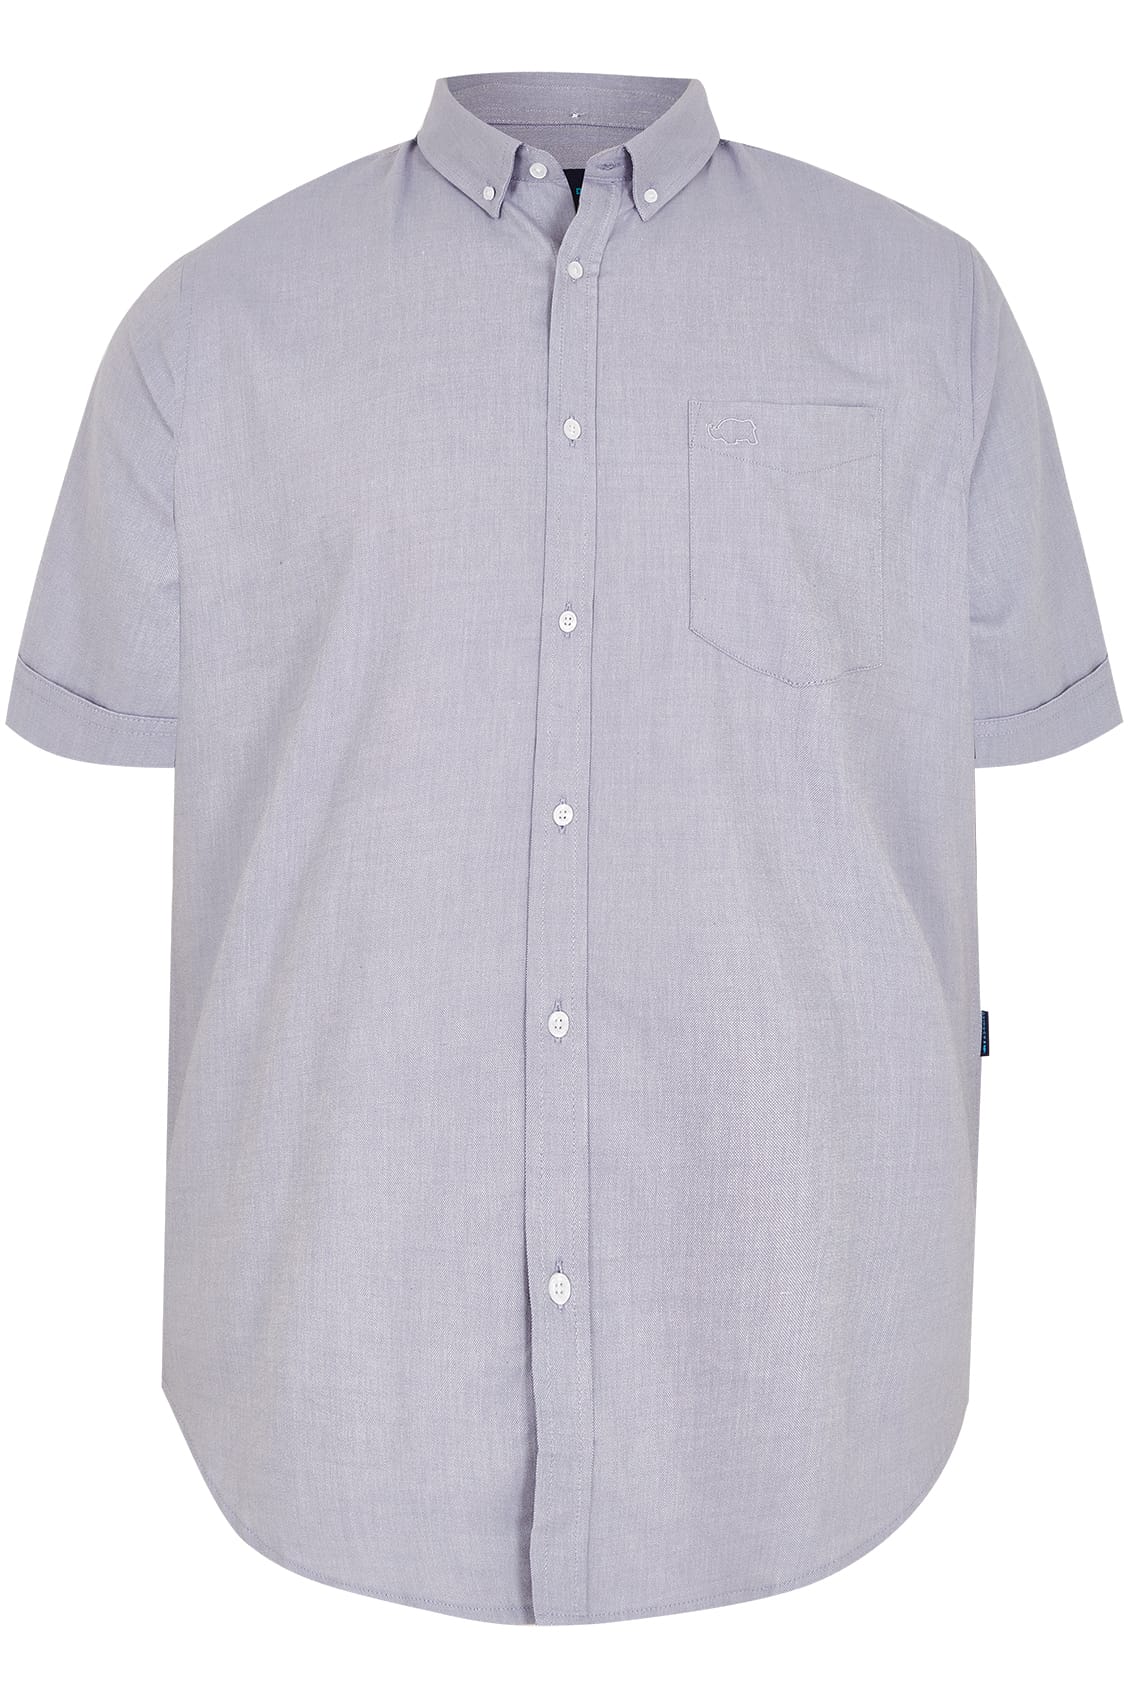 BadRhino Blue Cotton Short Sleeved Oxford Shirt Extra large sizes L to 8XL